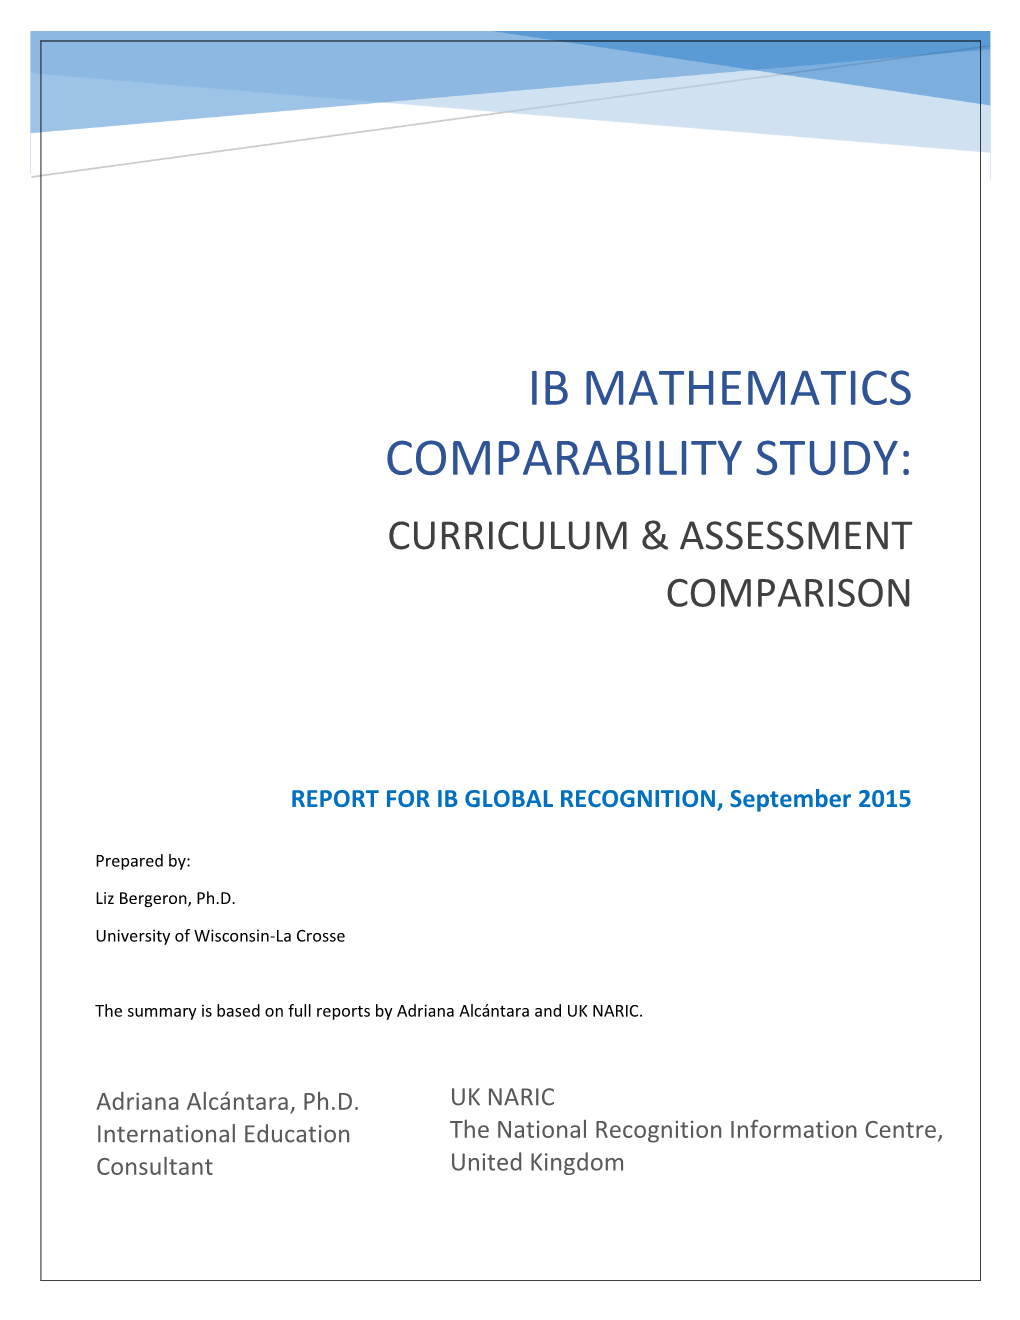 Ib Mathematics Comparability Study: Curriculum & Assessment Comparison